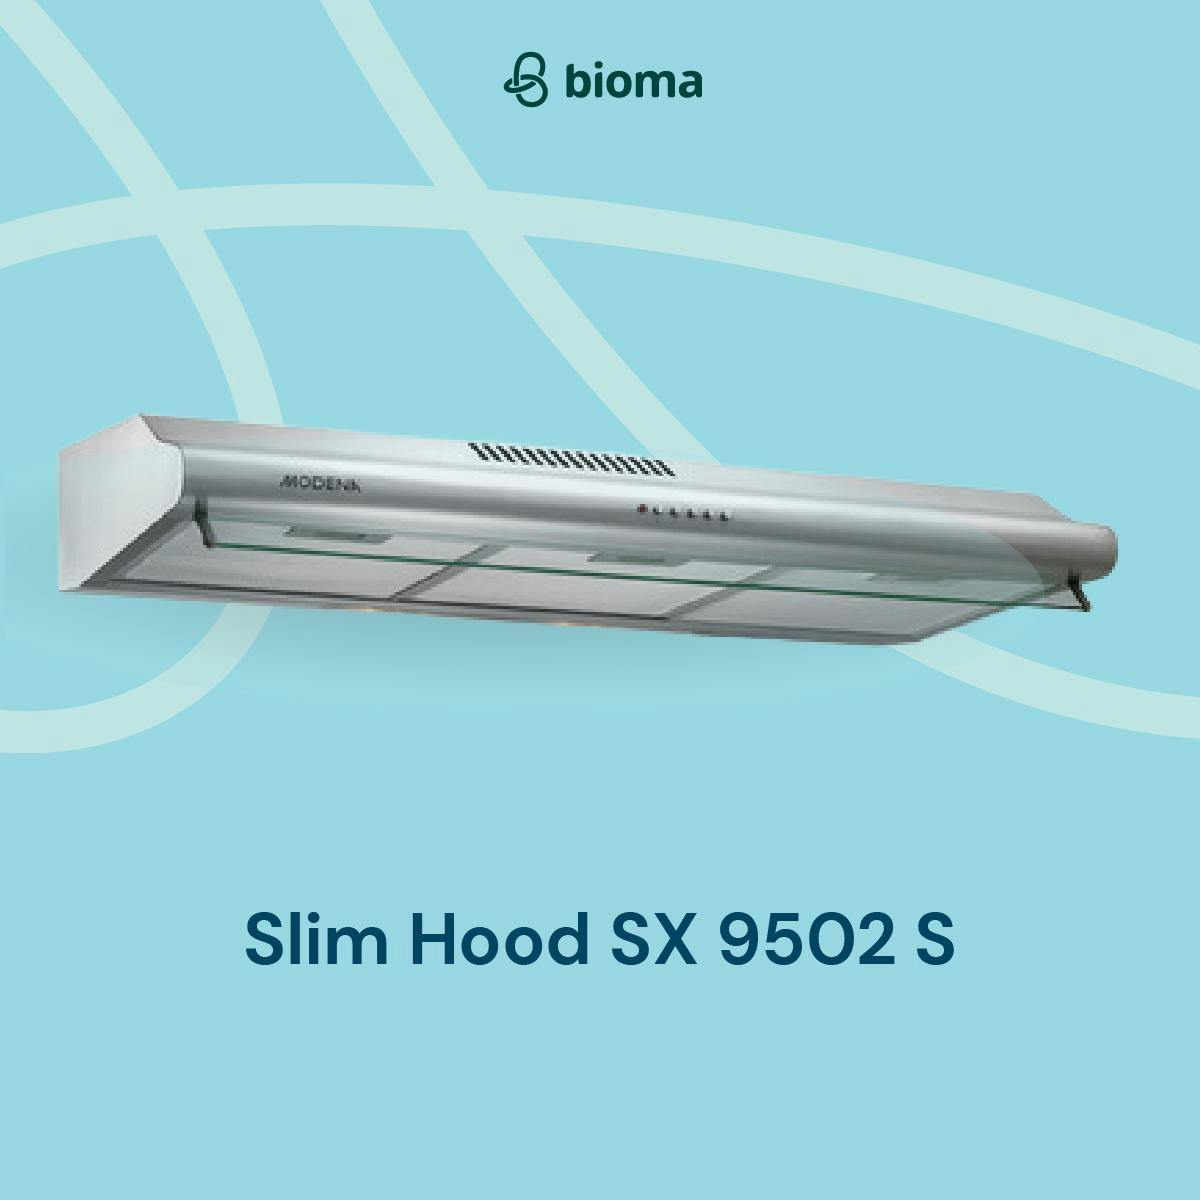 Slim Hood SX 9502 S